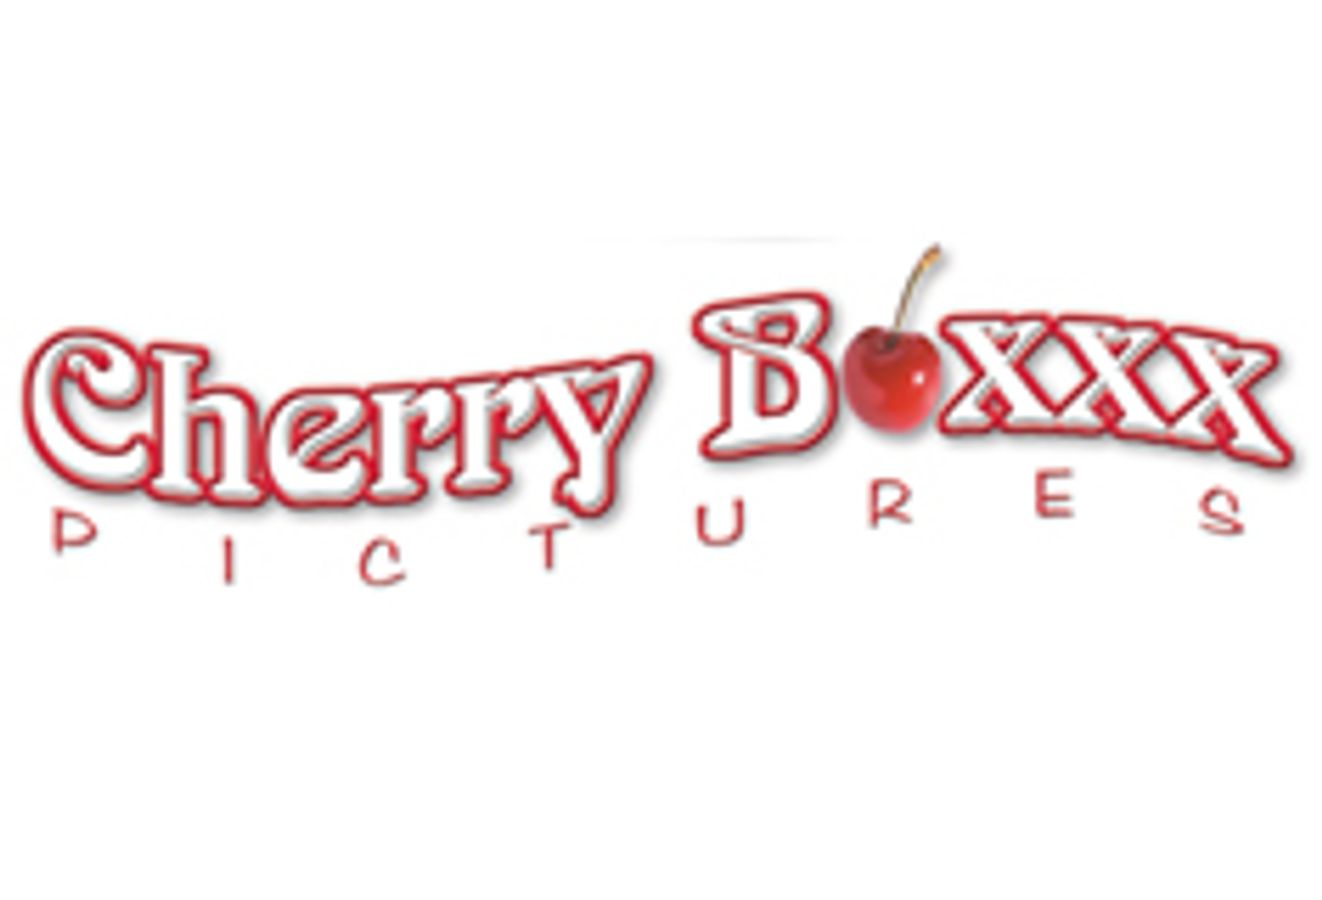 Cherry Boxx